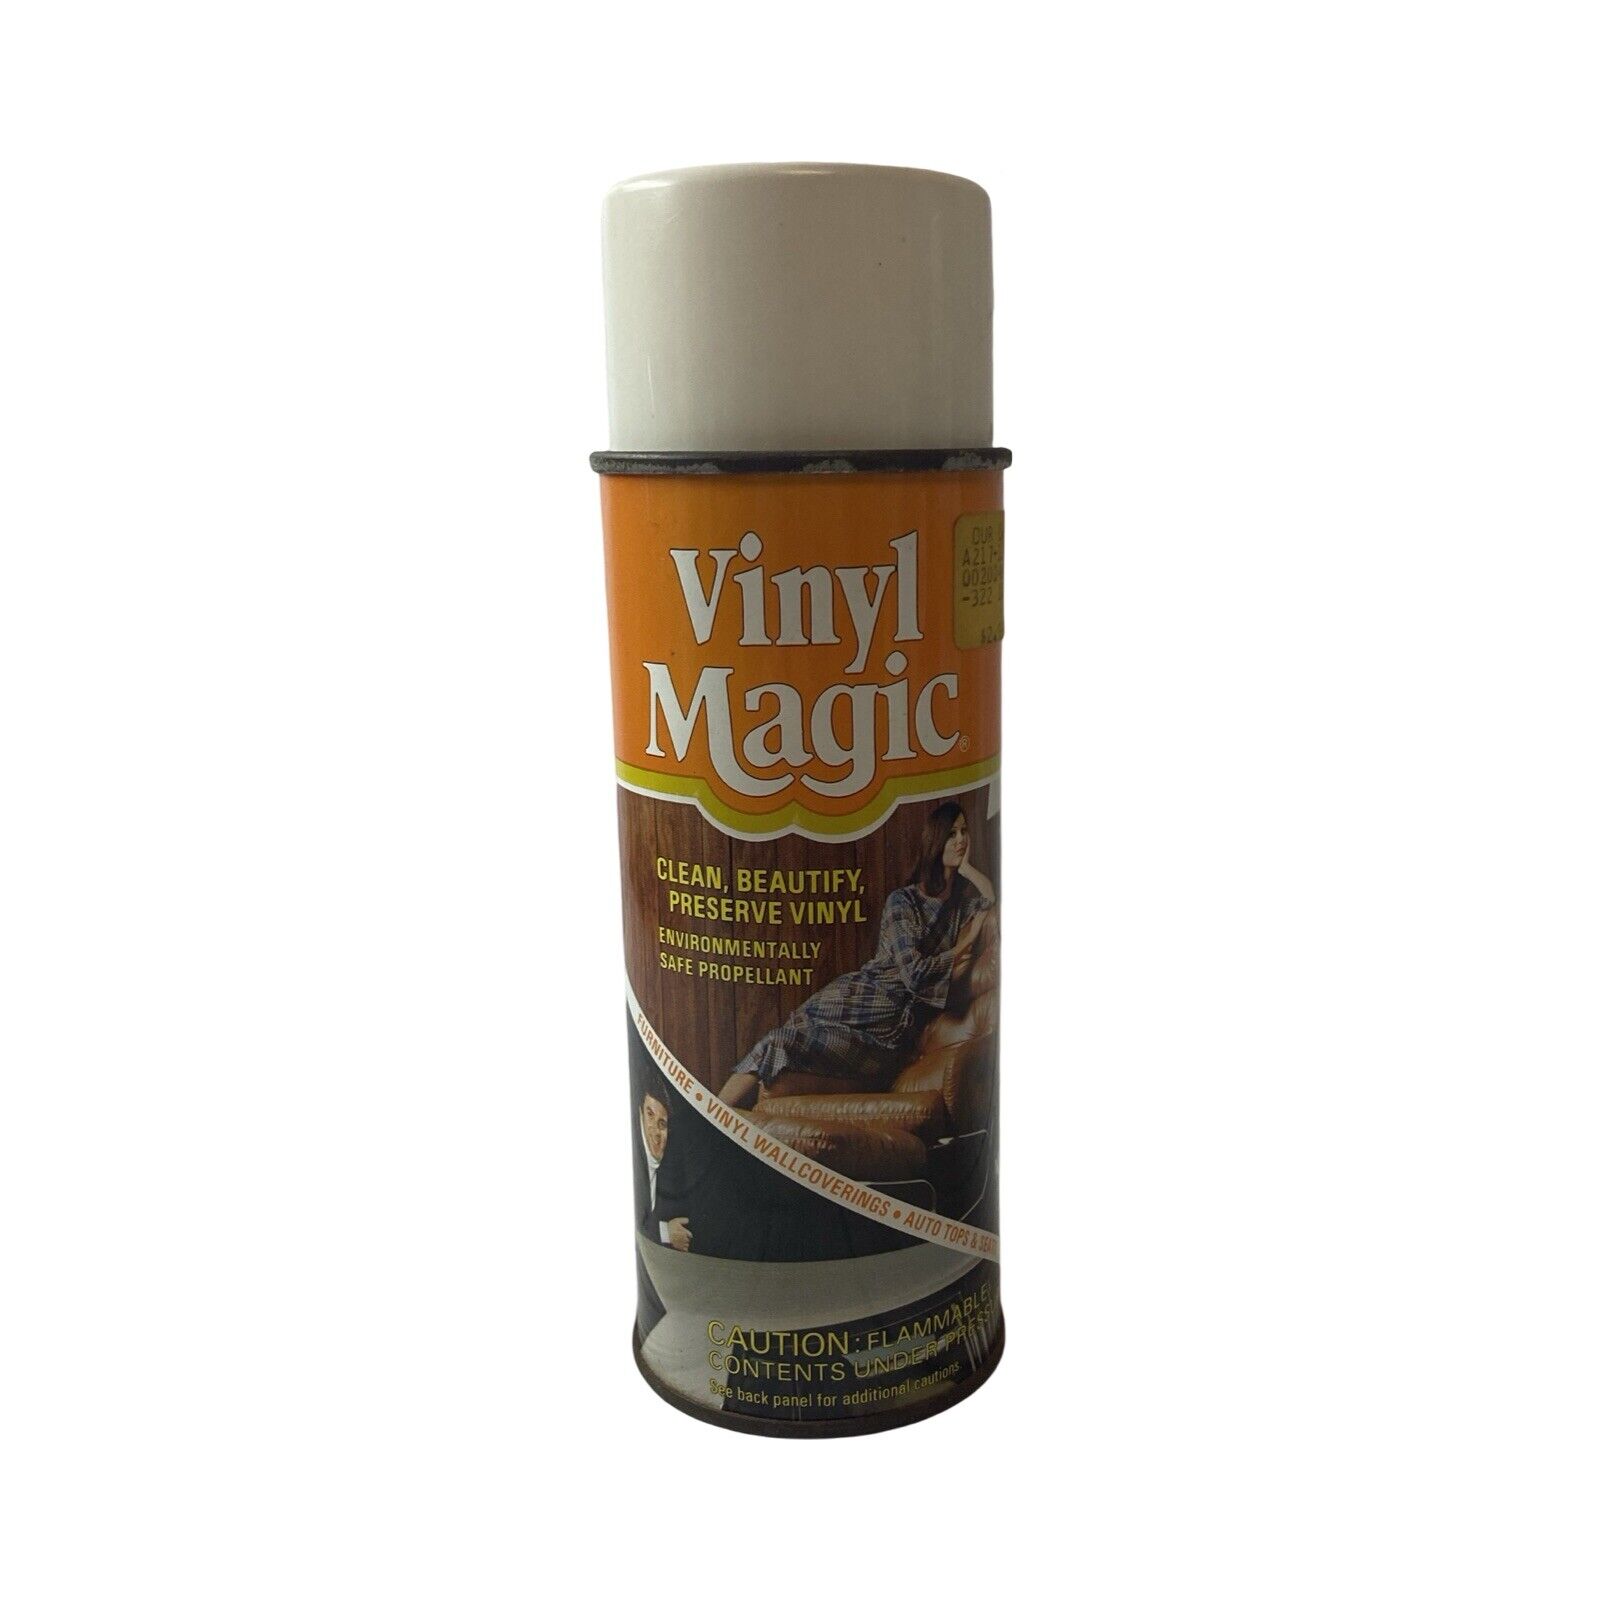 Vinyl Magic Spray Can Vinyl Cleaner Full Vintage 1970's Use or Display NOS